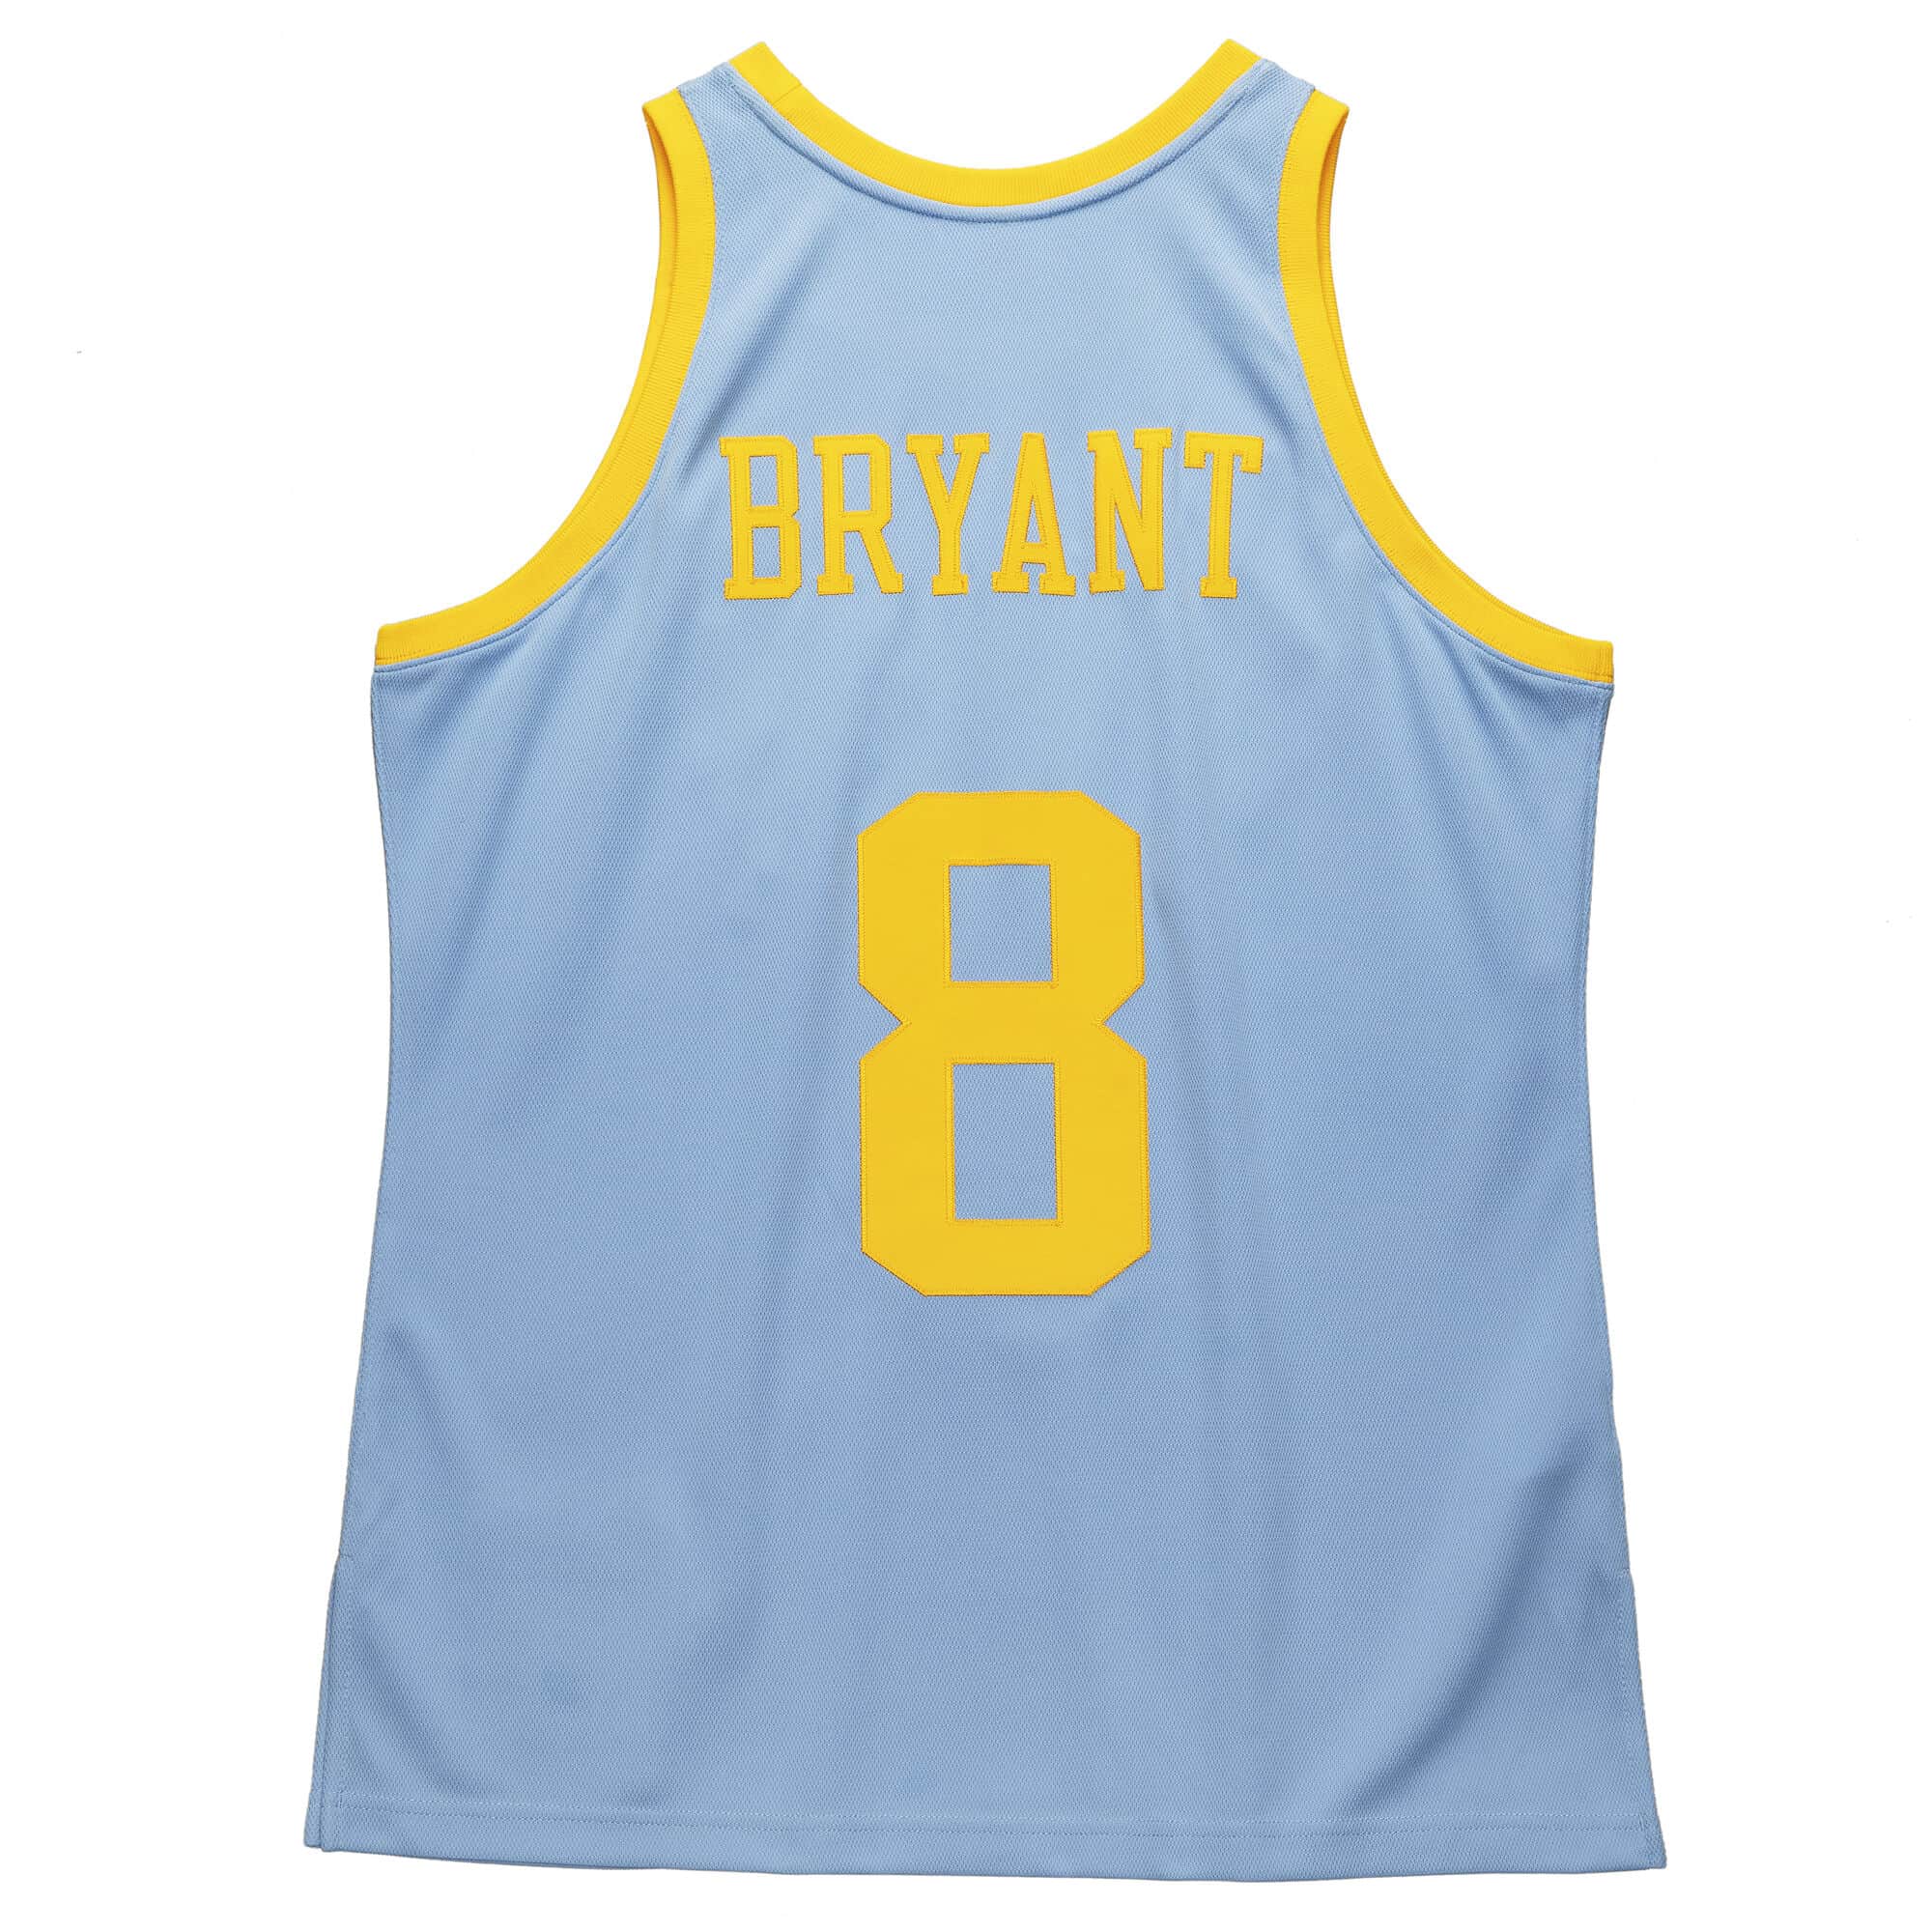 2001-02 Upper Deck MVP Game Used Shooting Shirt Kobe Bryant Lakers Authentic